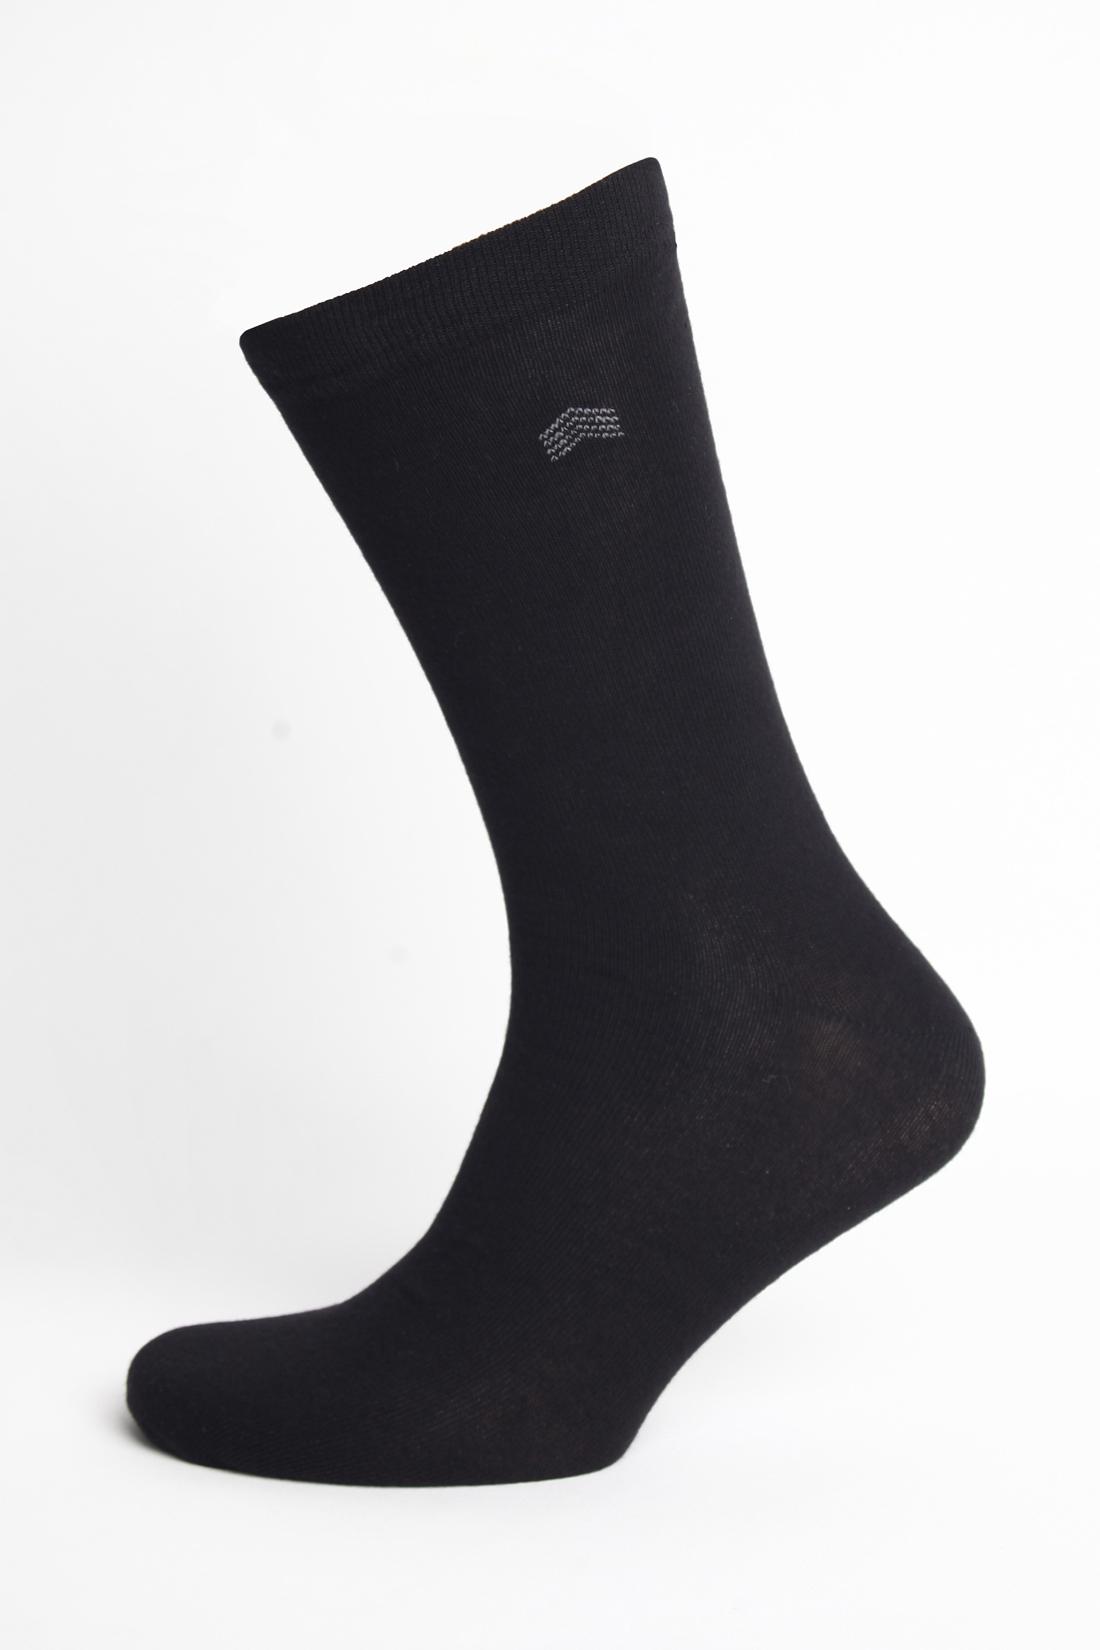 Мужские носки, 1 пара (арт. baon B891001), размер 43/45, цвет черный